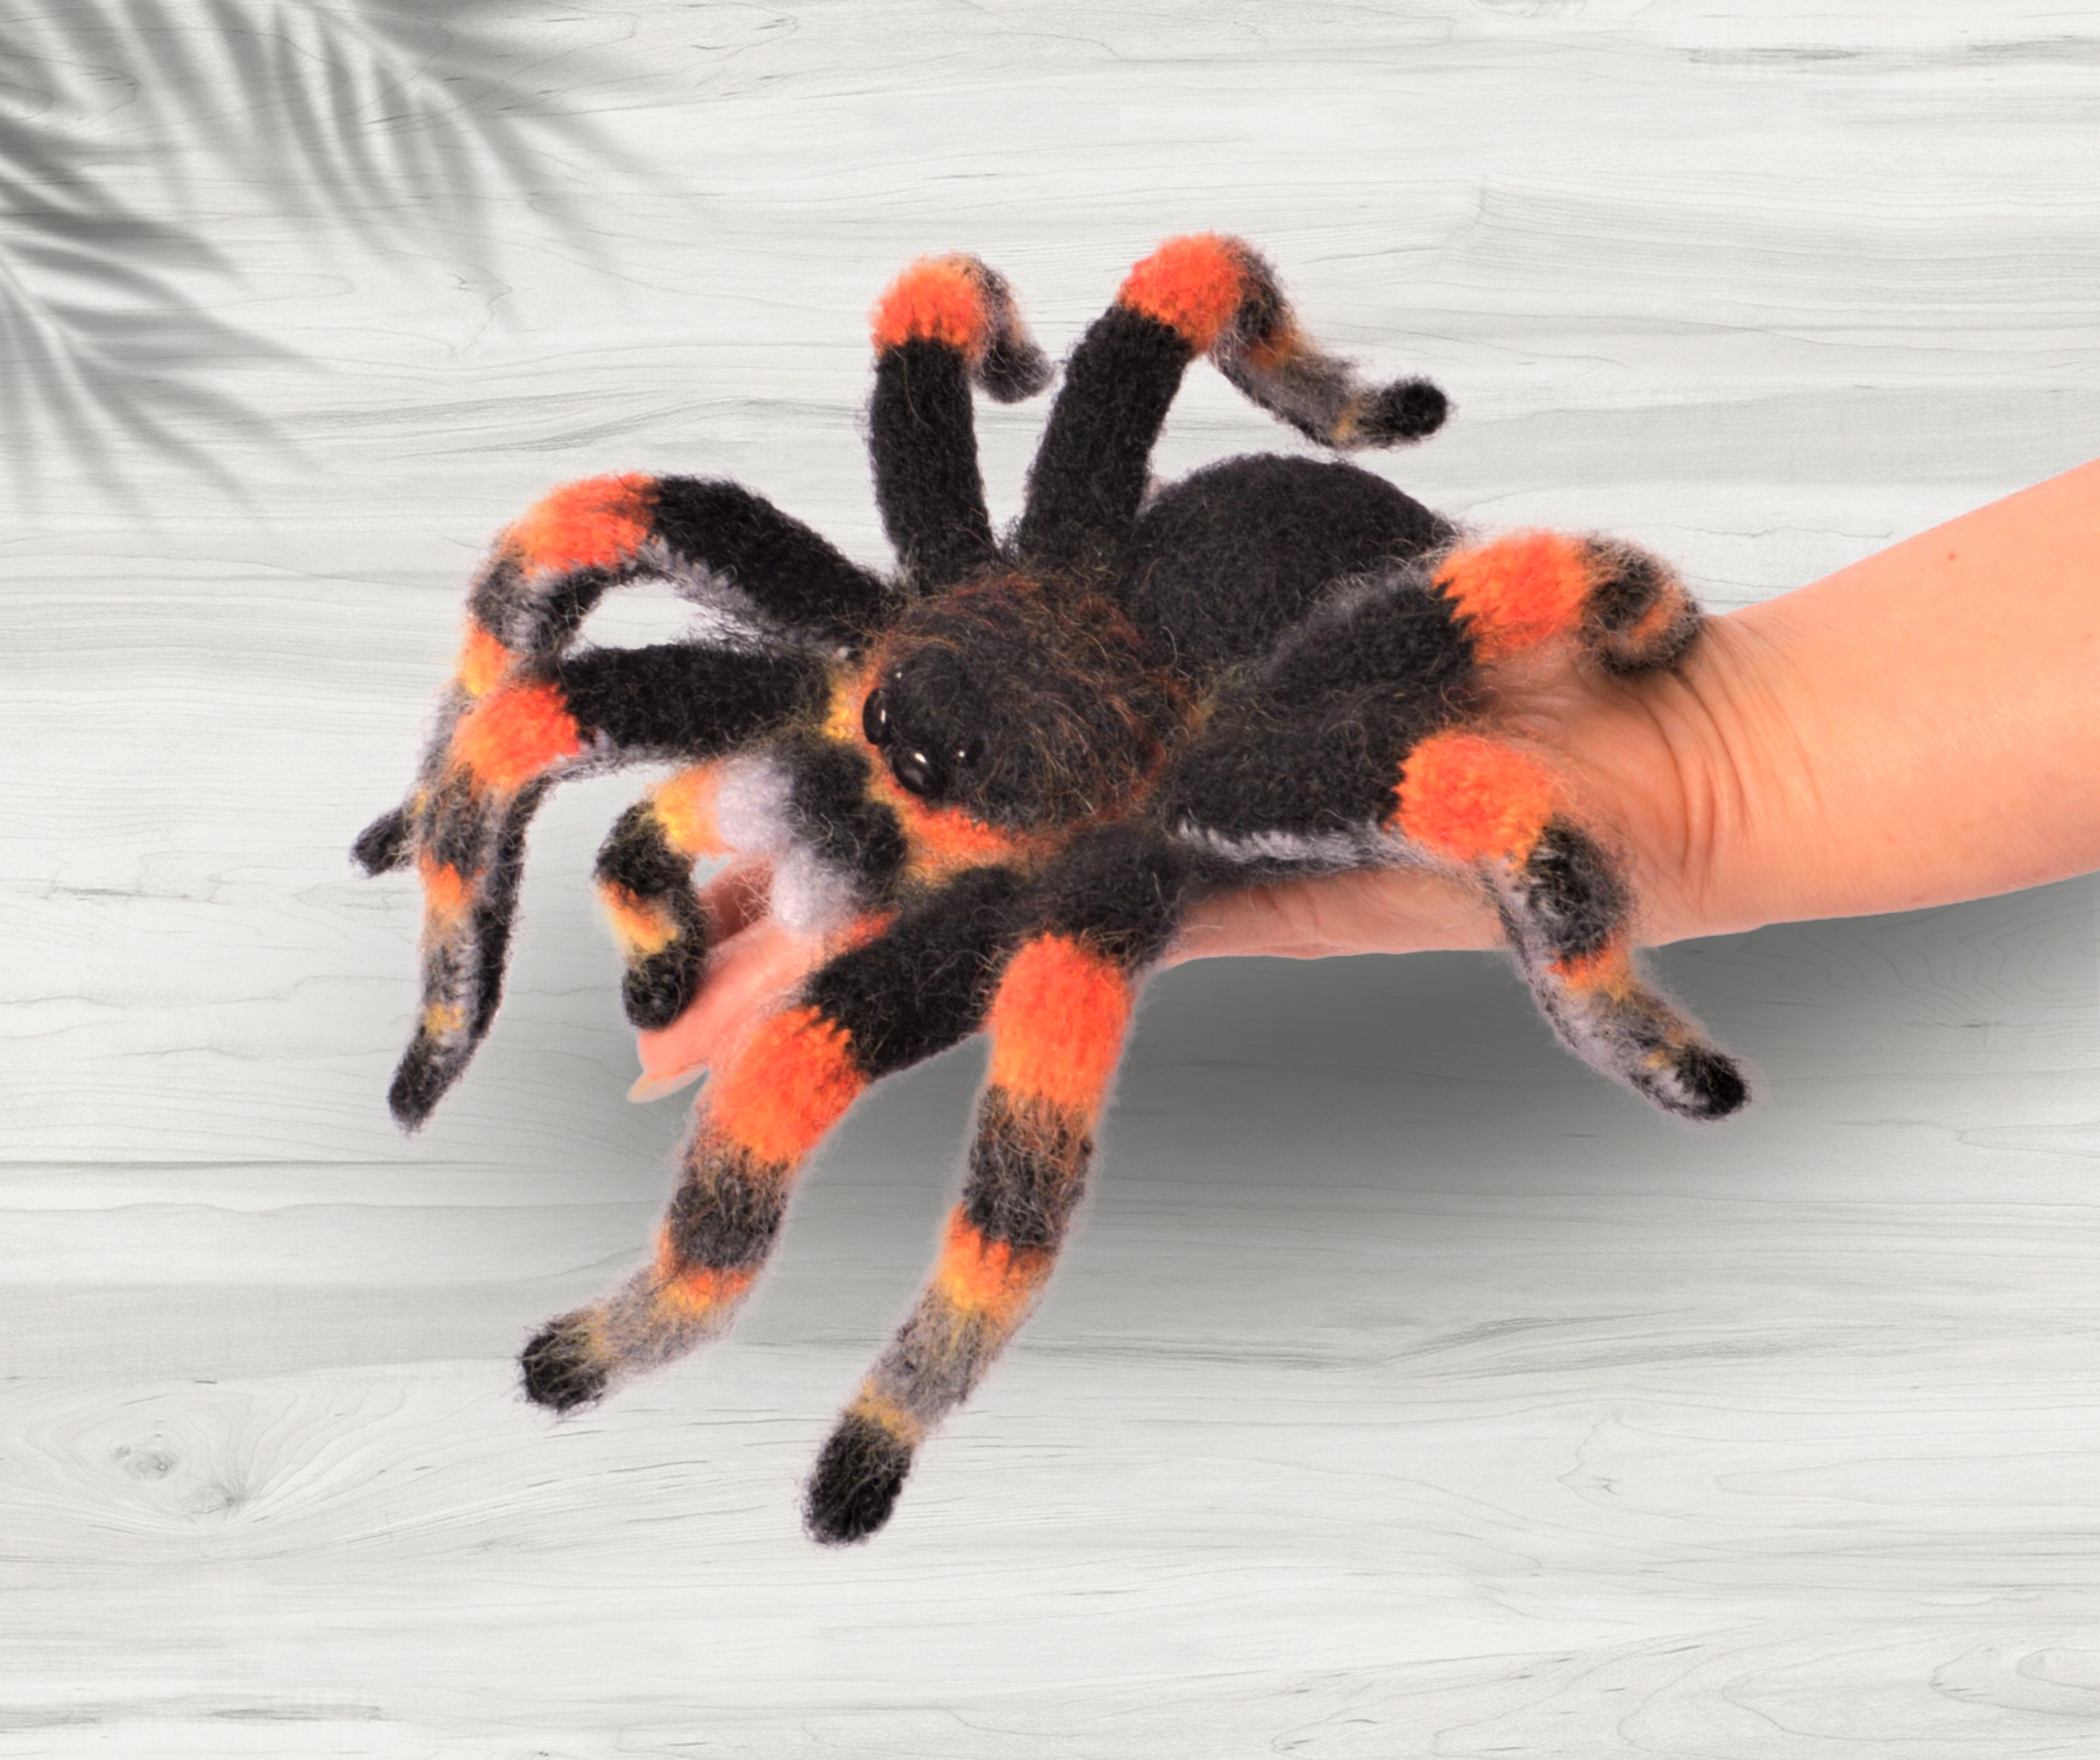 Spinne Schlüsselanhänger Miniblings Anhänger Vogelspinne Tarantel Halloween